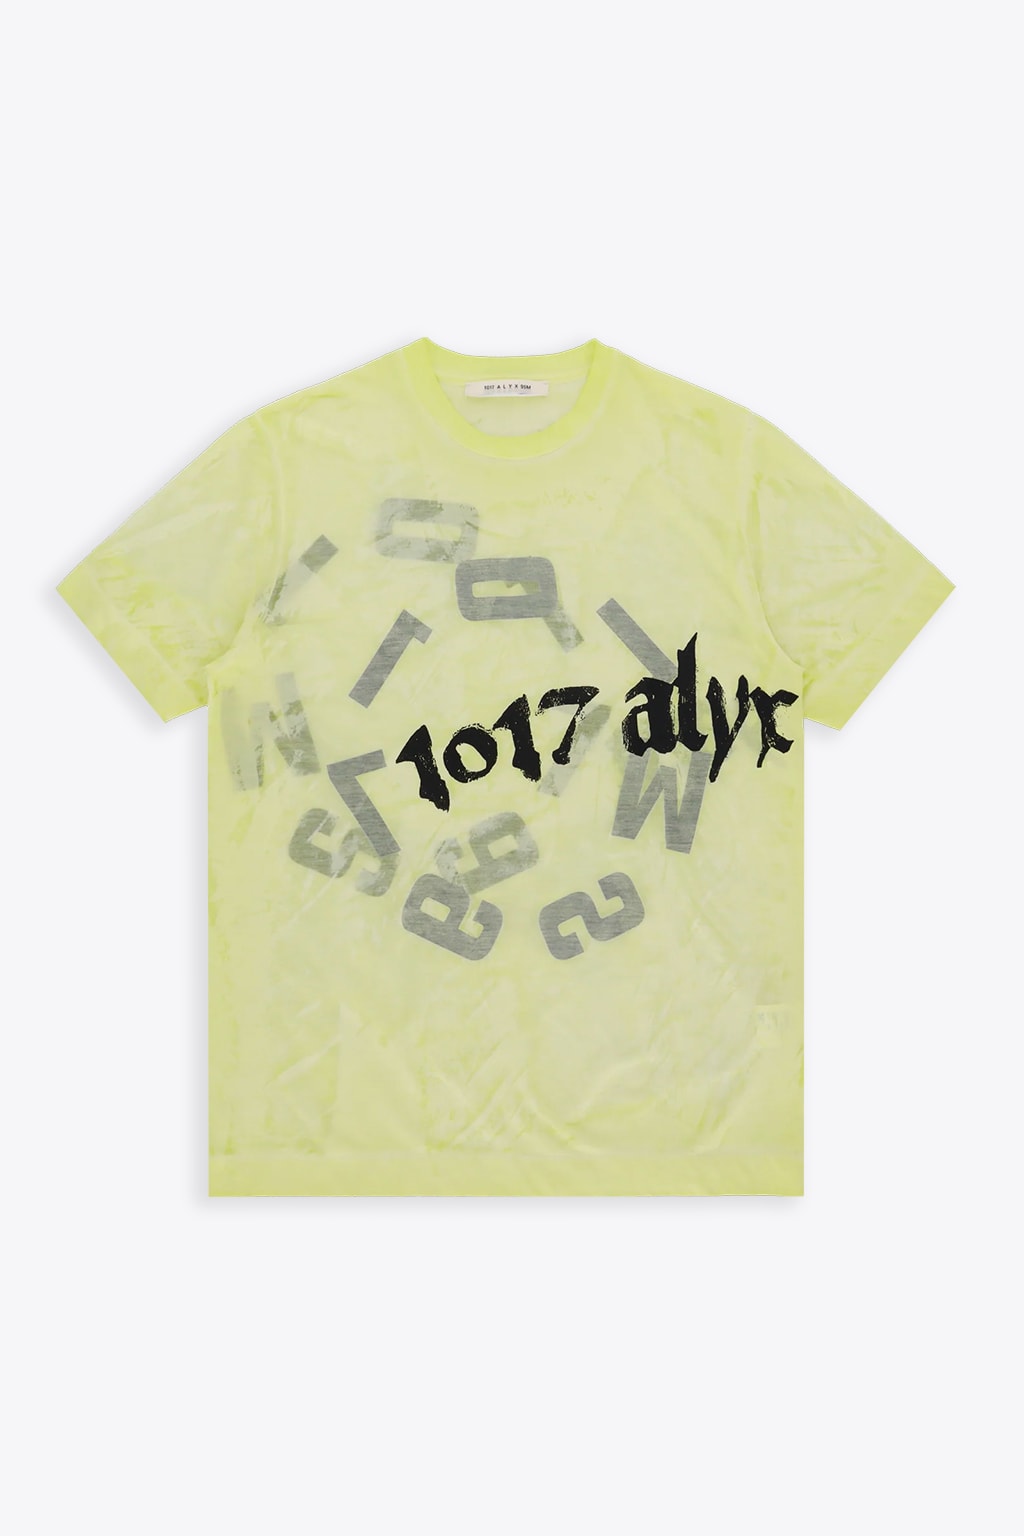 Alyx Translucent Graphic S/s T-shirt Neon Yellow Cotton Translucent T-shirt - Translucent Graphic S/s T-s